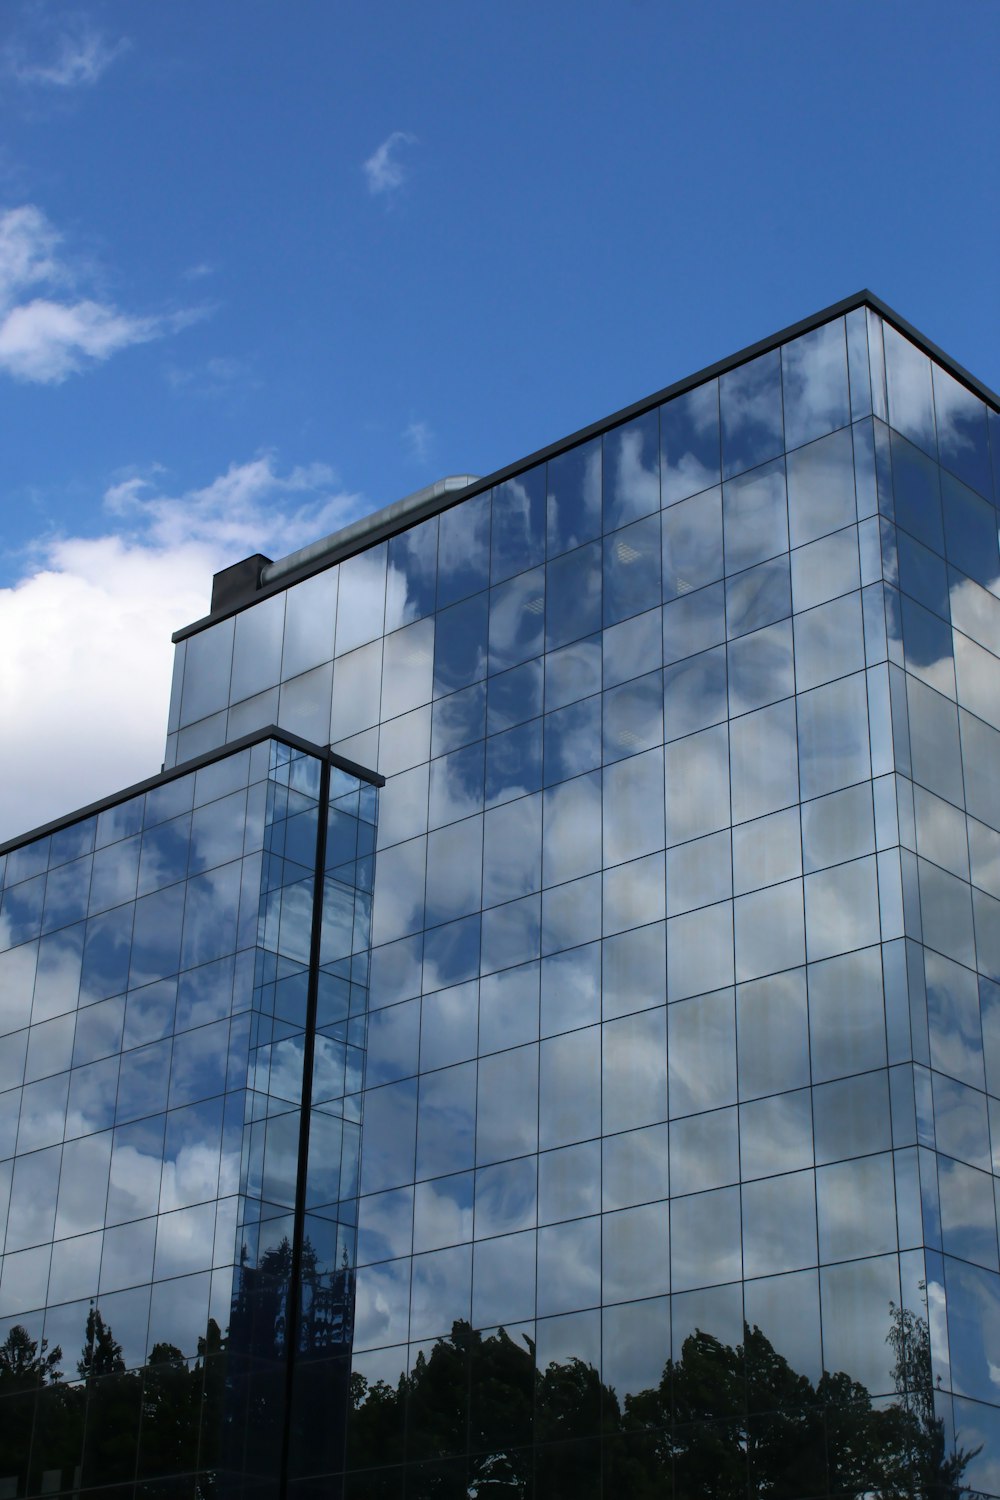 edifício de vidro azul e branco sob o céu azul durante o dia